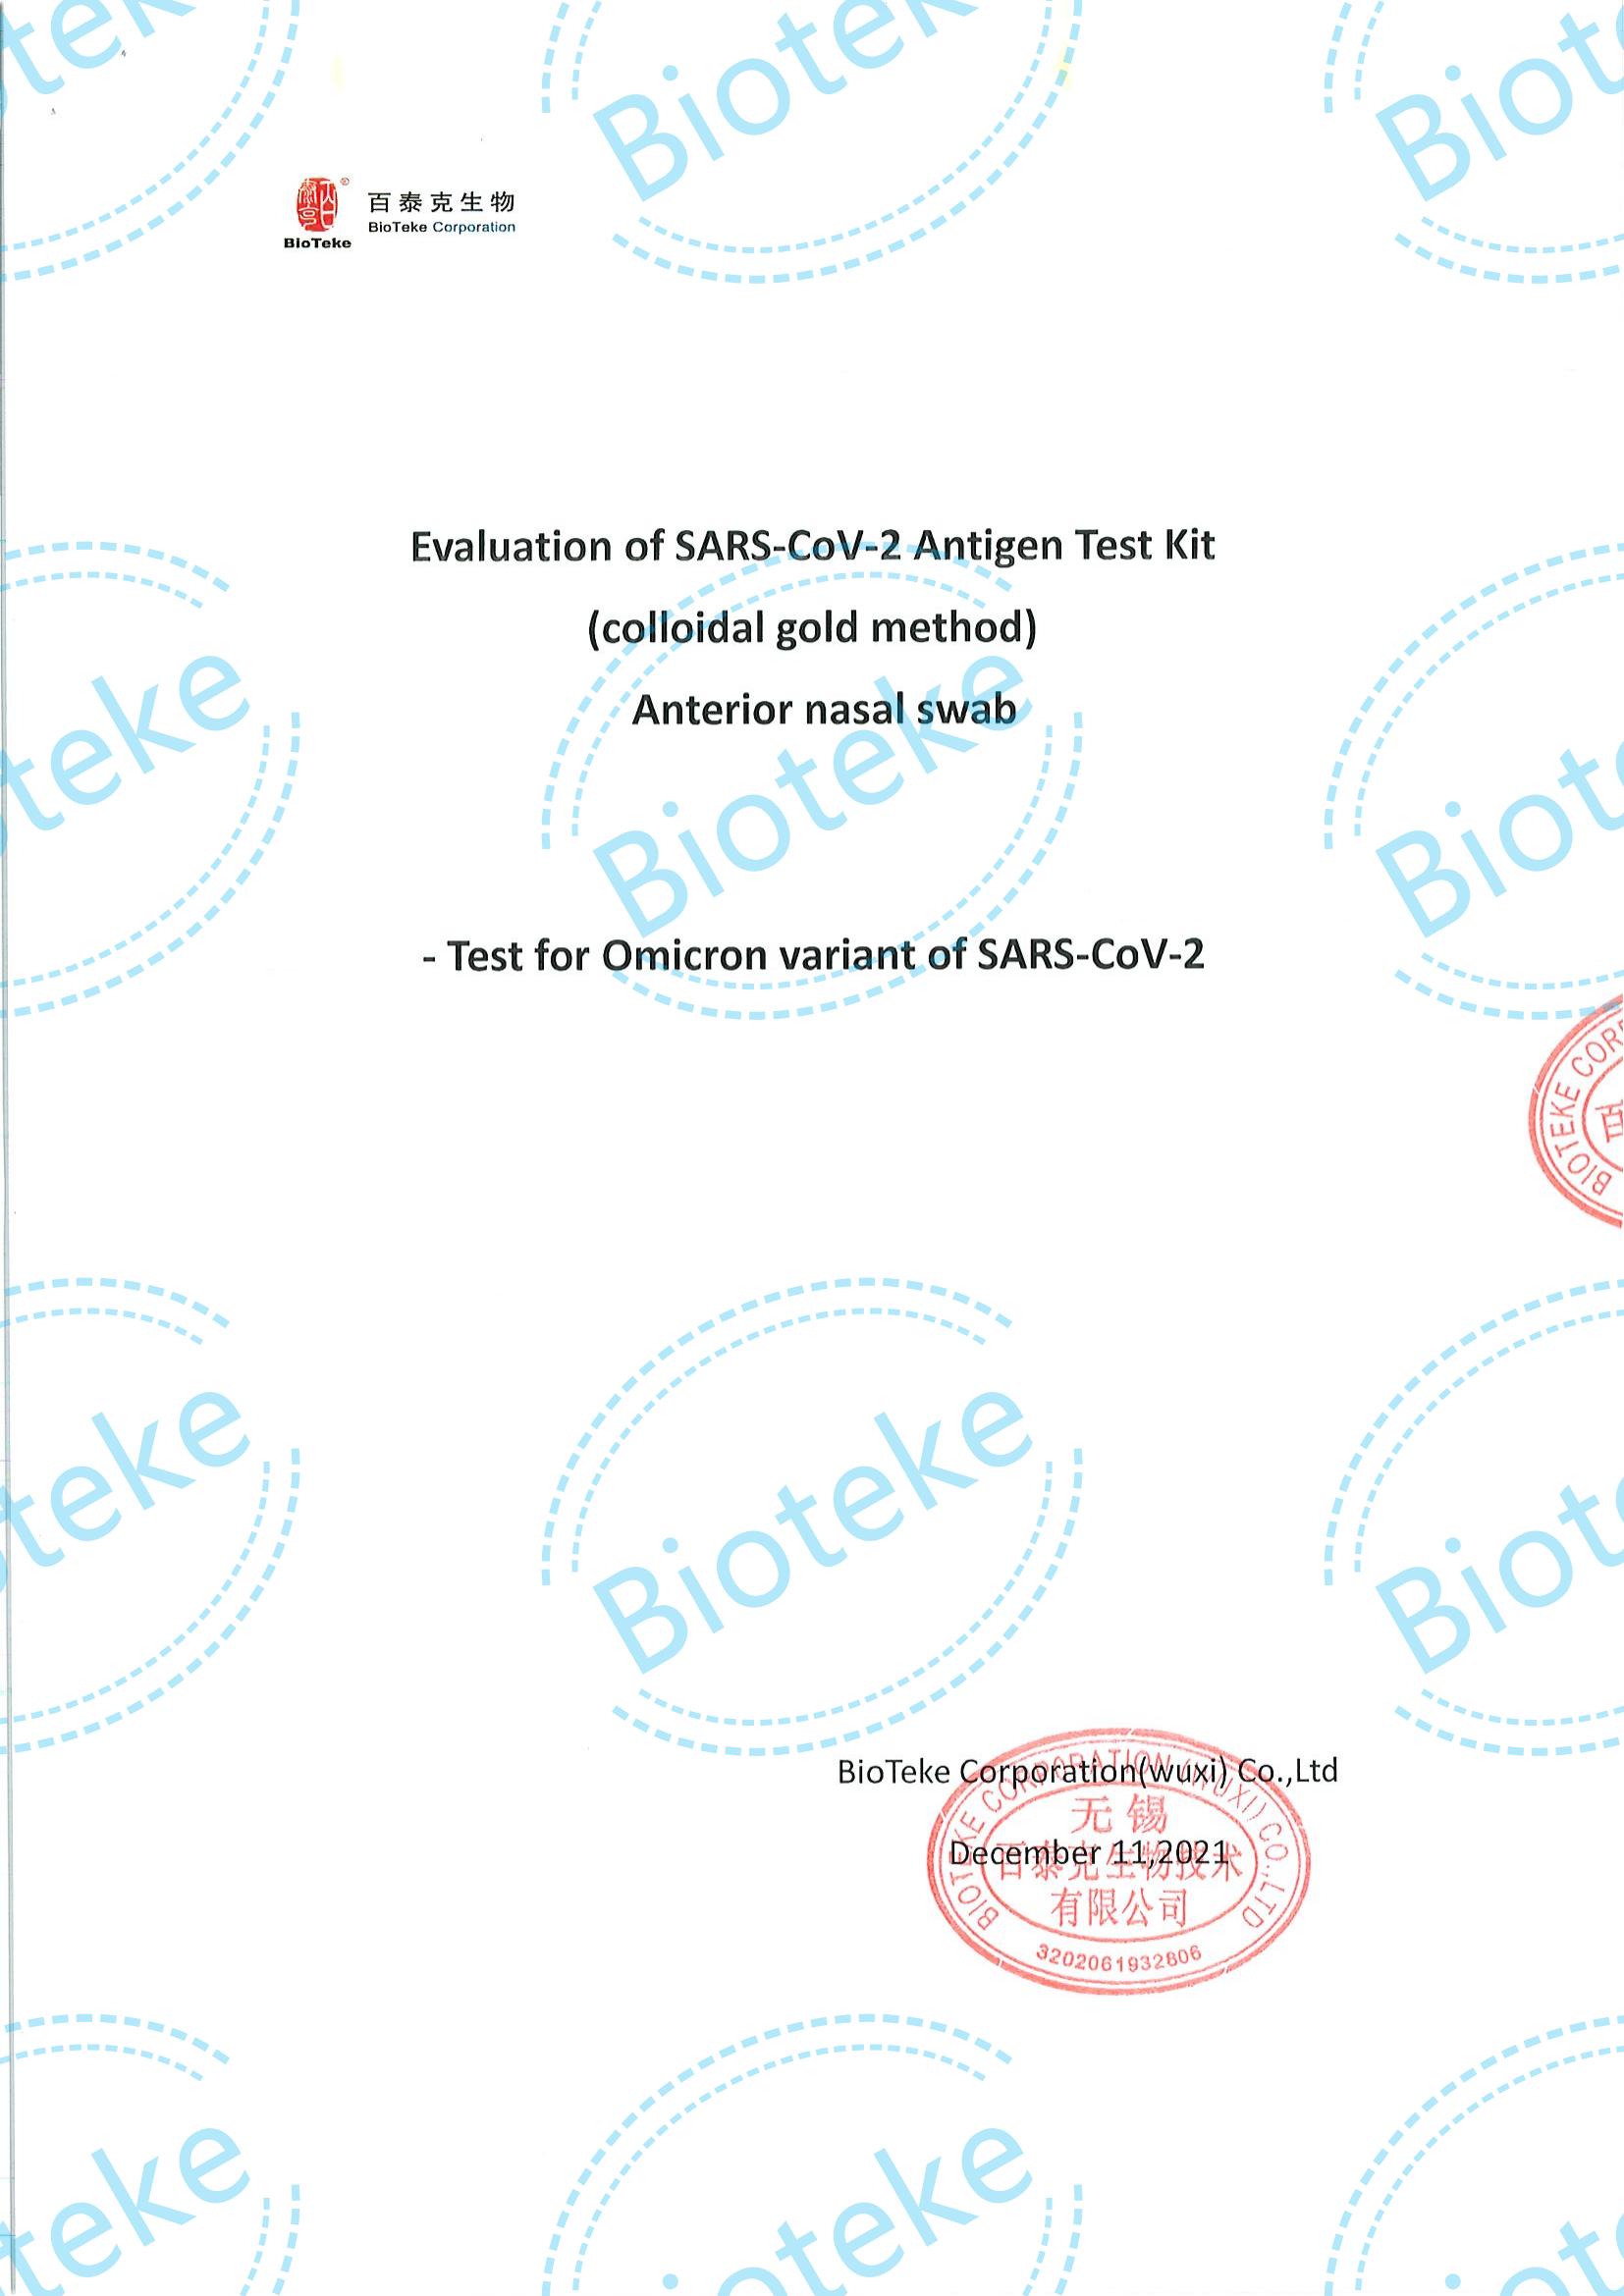 Bioteke_SARS-CoV-2 Antigen IVD Kit اختبار الأنف الأمامي لتقييم تفاعل السلالة (Omicron)_00